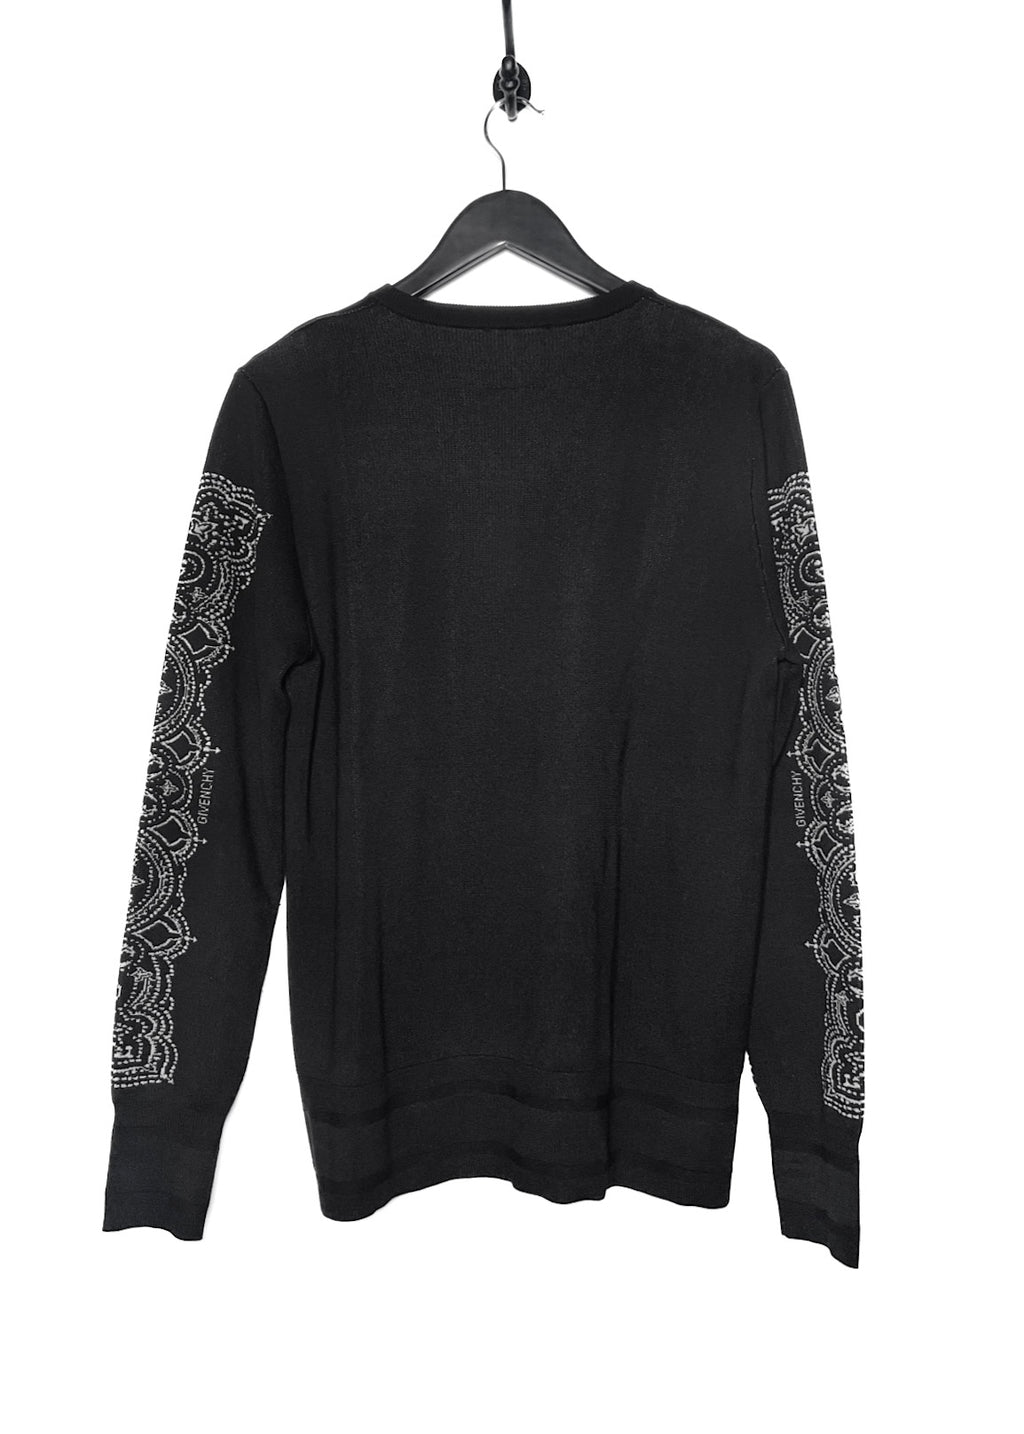 Givenchy Black Ivory Intersia Bandana Logo Silk Sweater